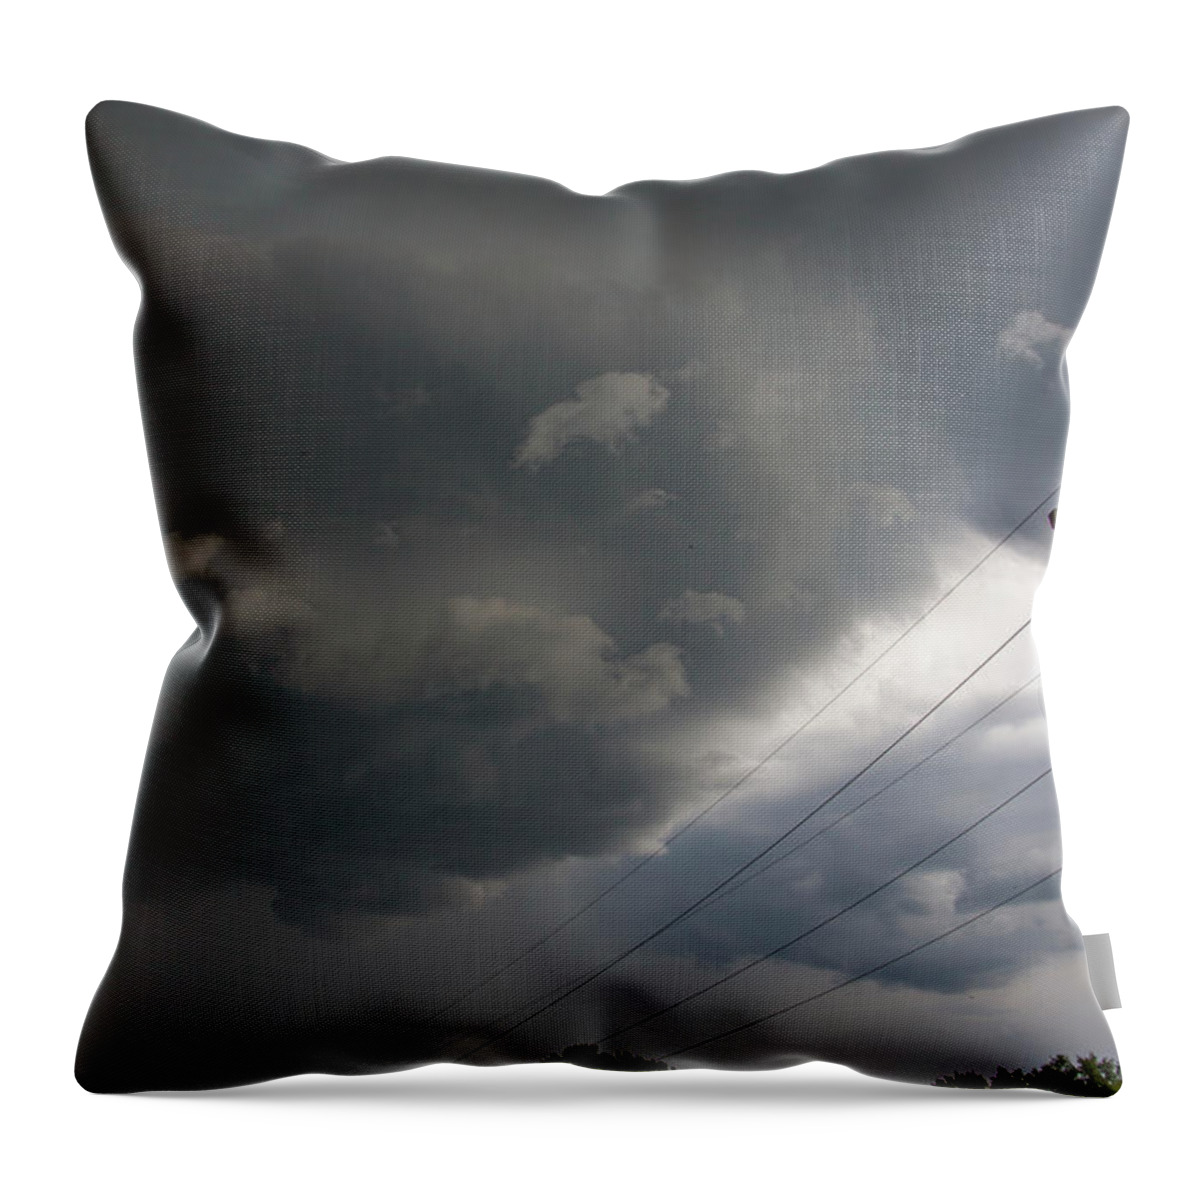 Nebraskasc Throw Pillow featuring the photograph Another Stellar Storm Chasing Day 015 by NebraskaSC